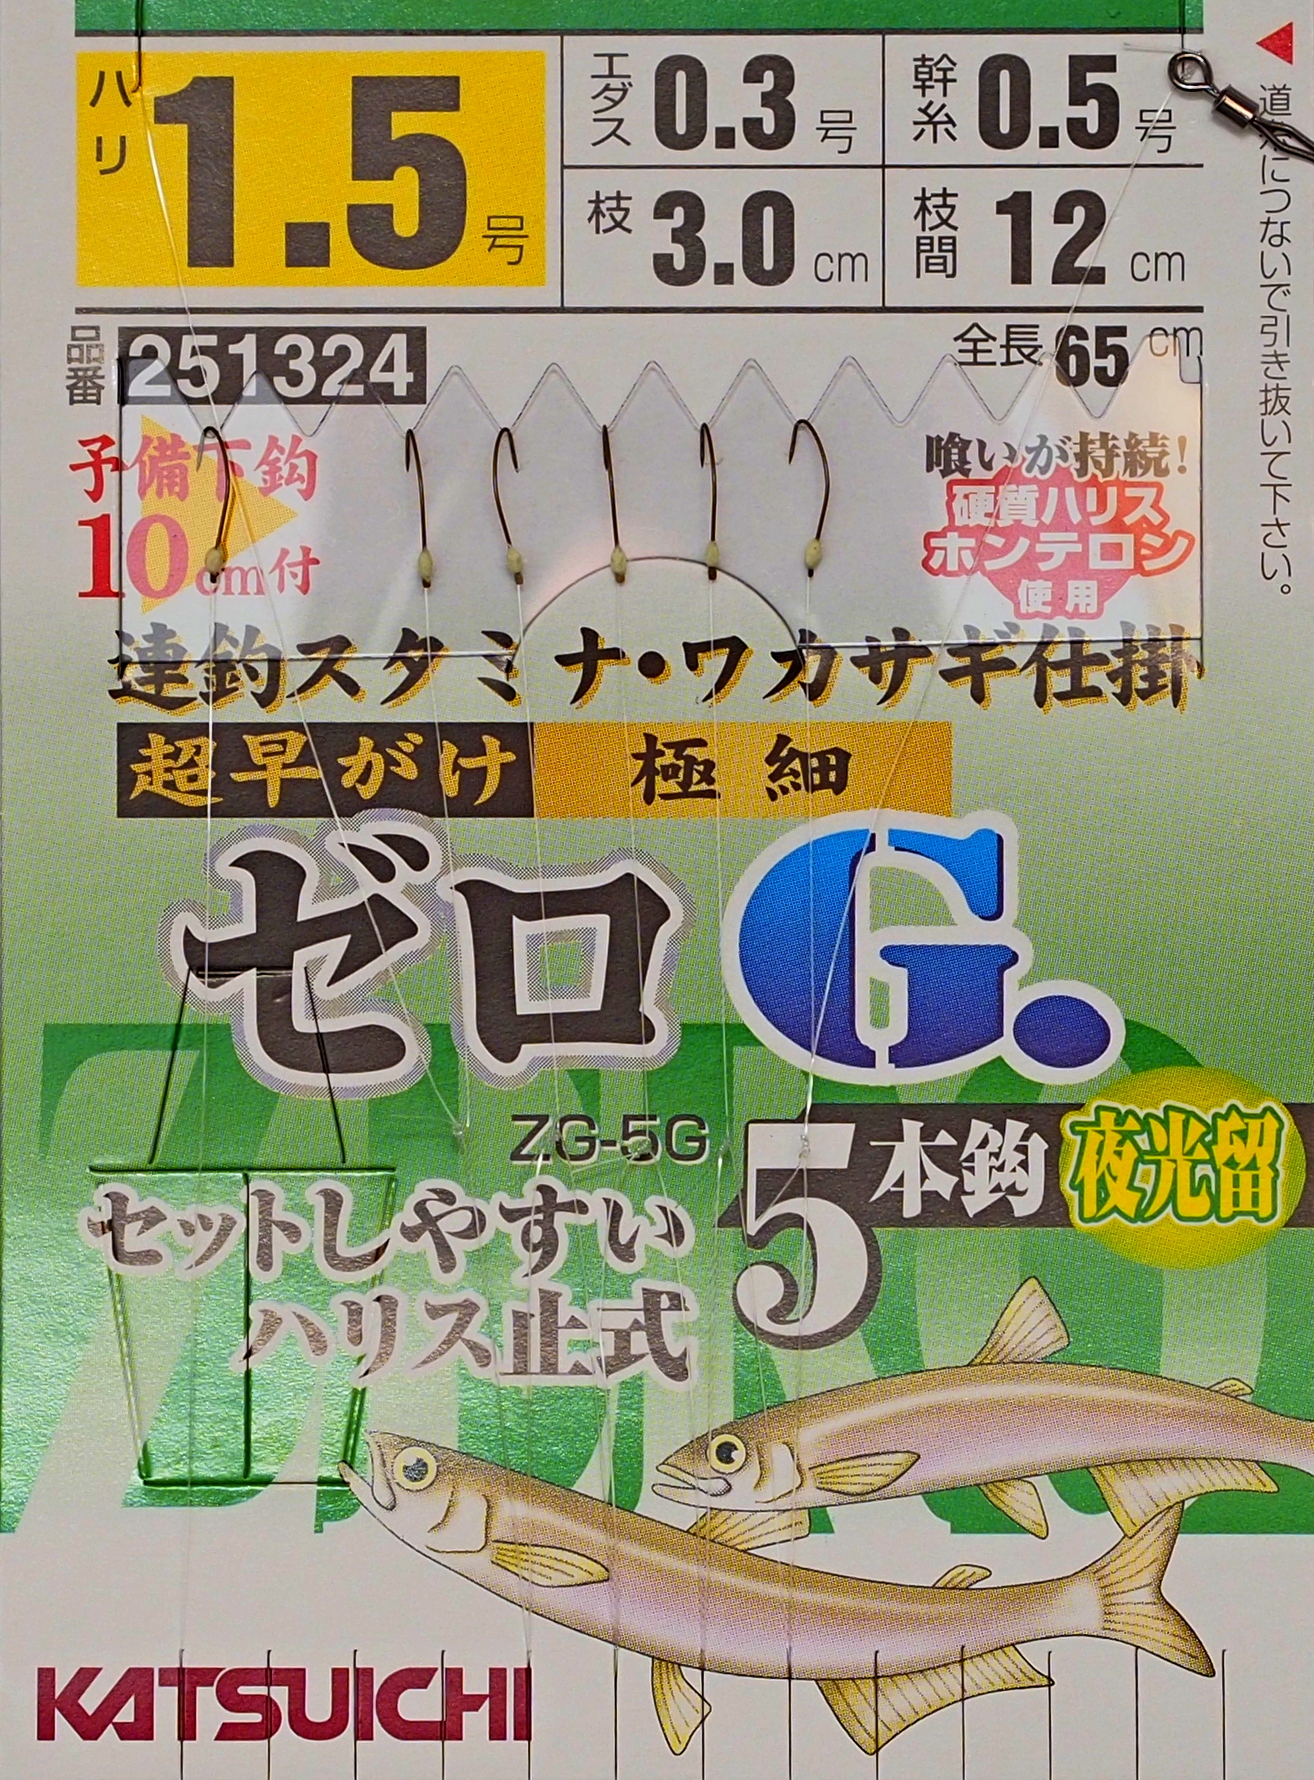 Самодур KATSUICHI ZG-5G #1.5 (65cm) 251324